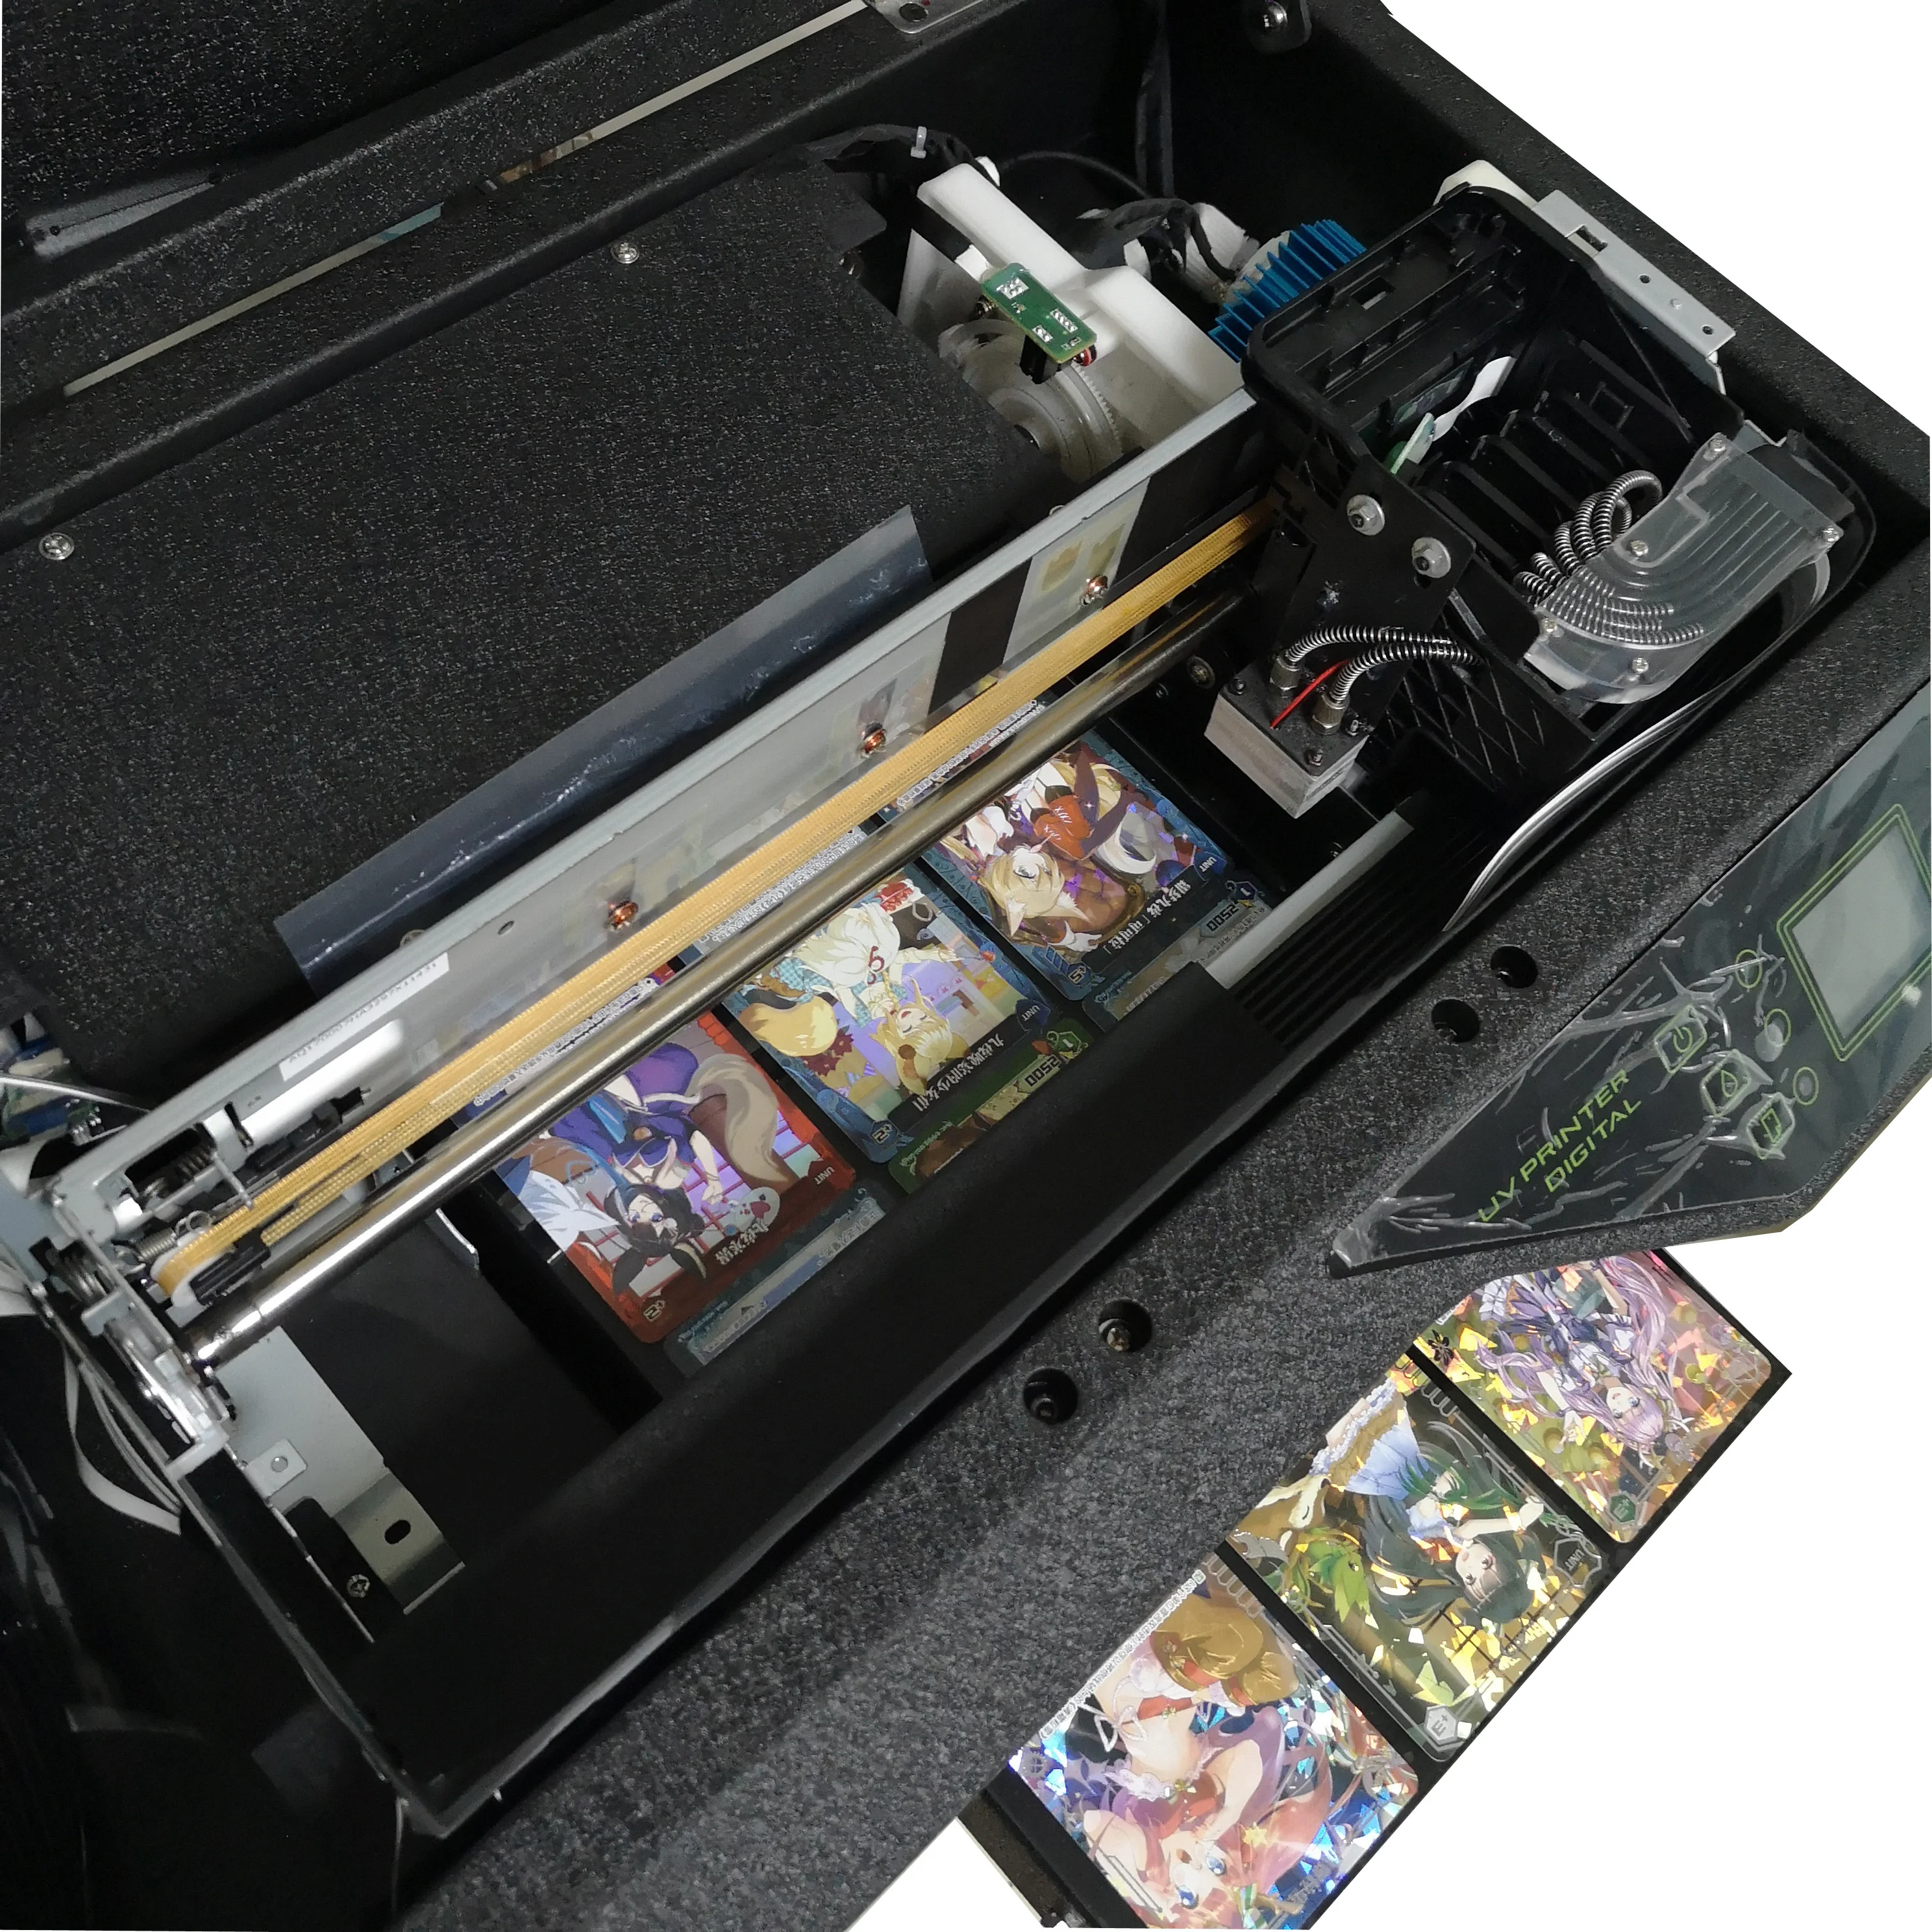 Top Seller Amj L800 Trading Pokemon Holographic Card Printer - Buy Holographic Card Printer ...